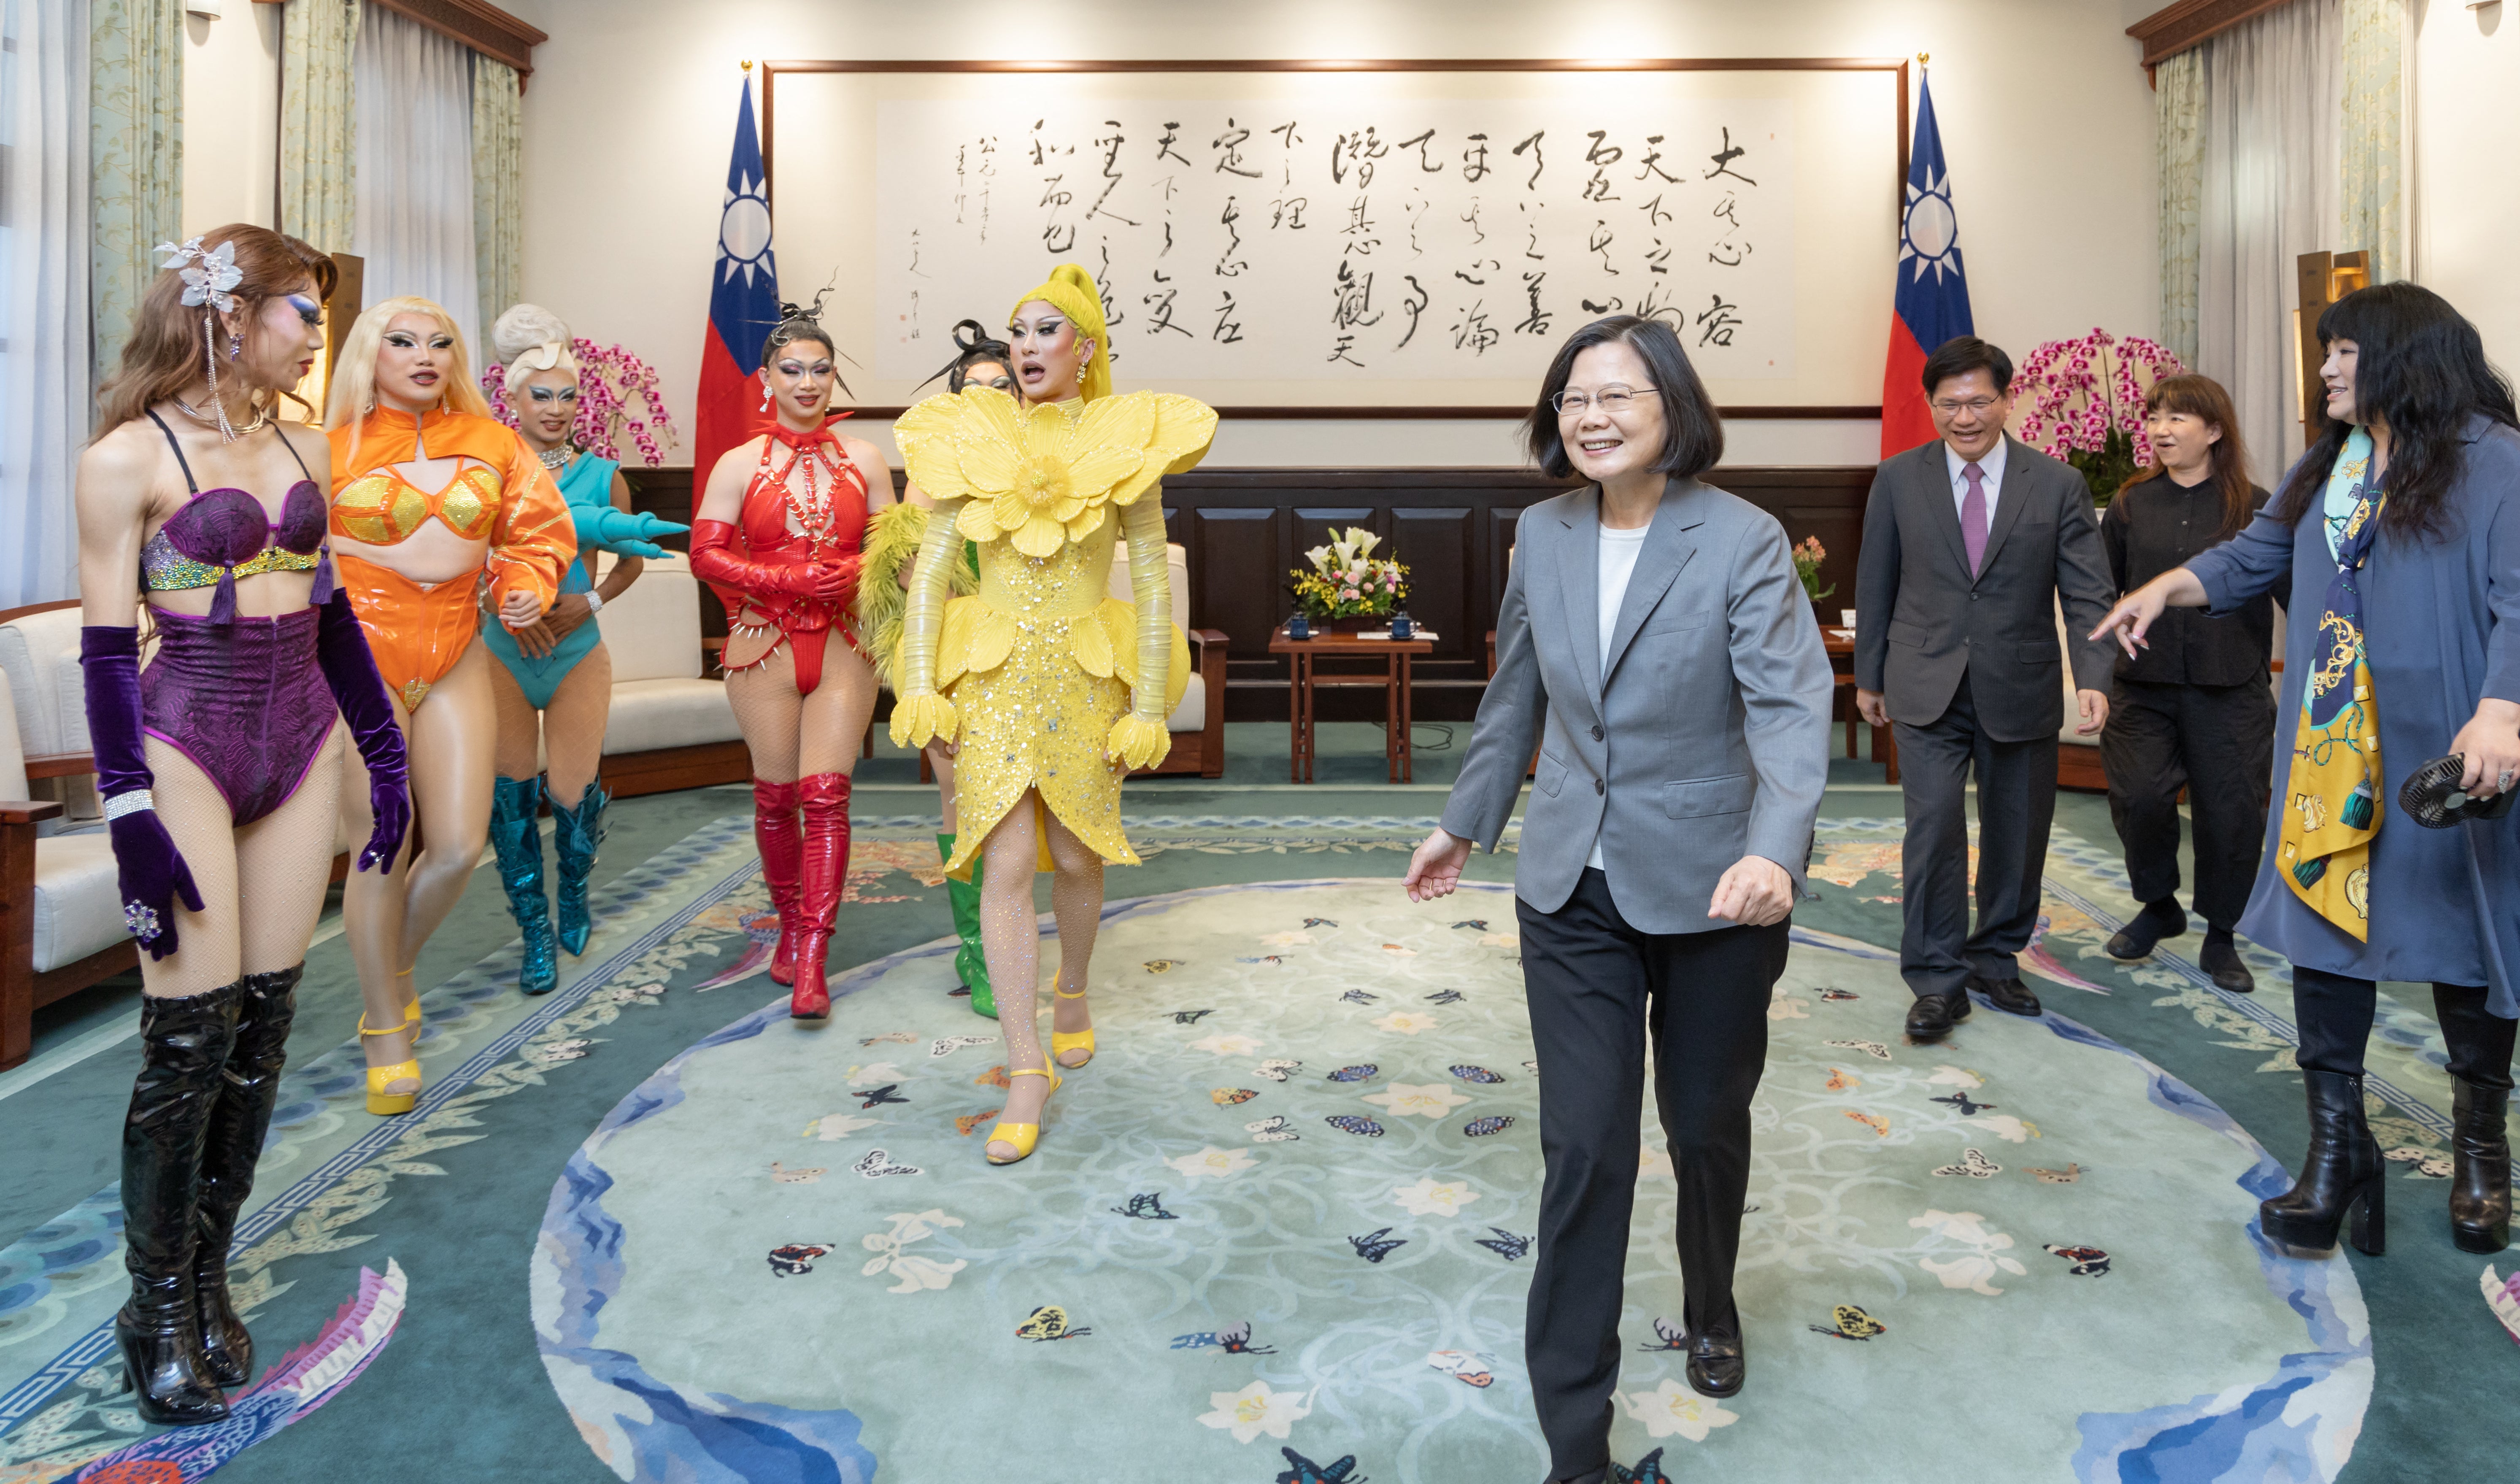 Taiwan’s president Tsai Ing-wen meets drag queen Nymphia Wind